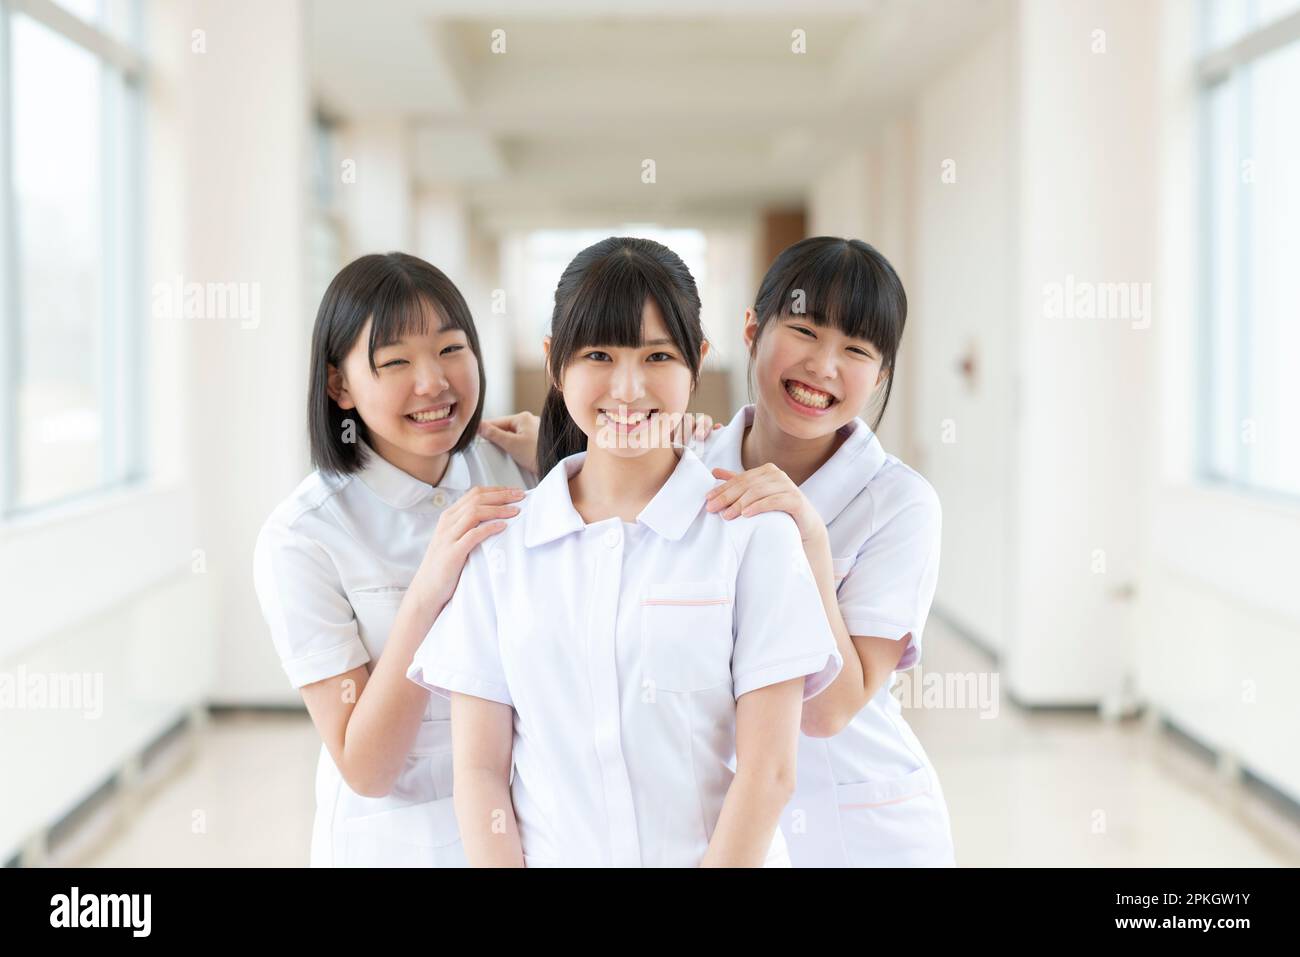 Smiling nursing student Stock Photo